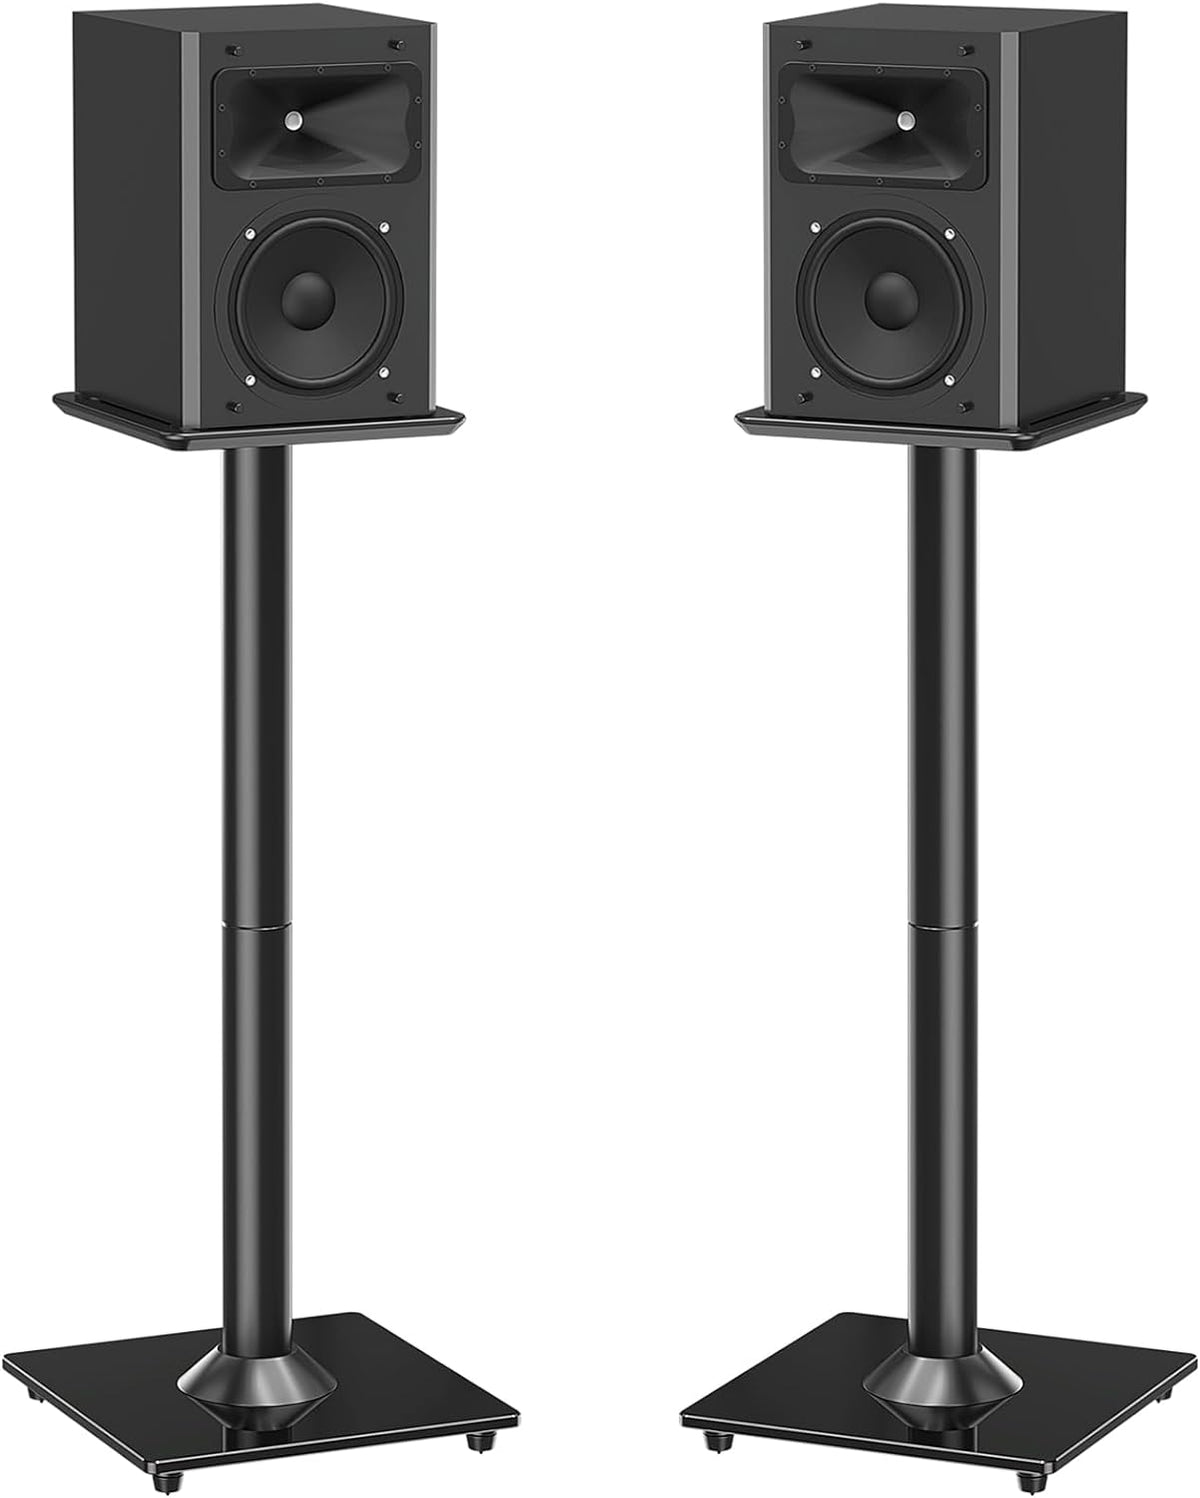 MOUNTUP Universal Speaker Stands Pair for Surround Sound MU9132